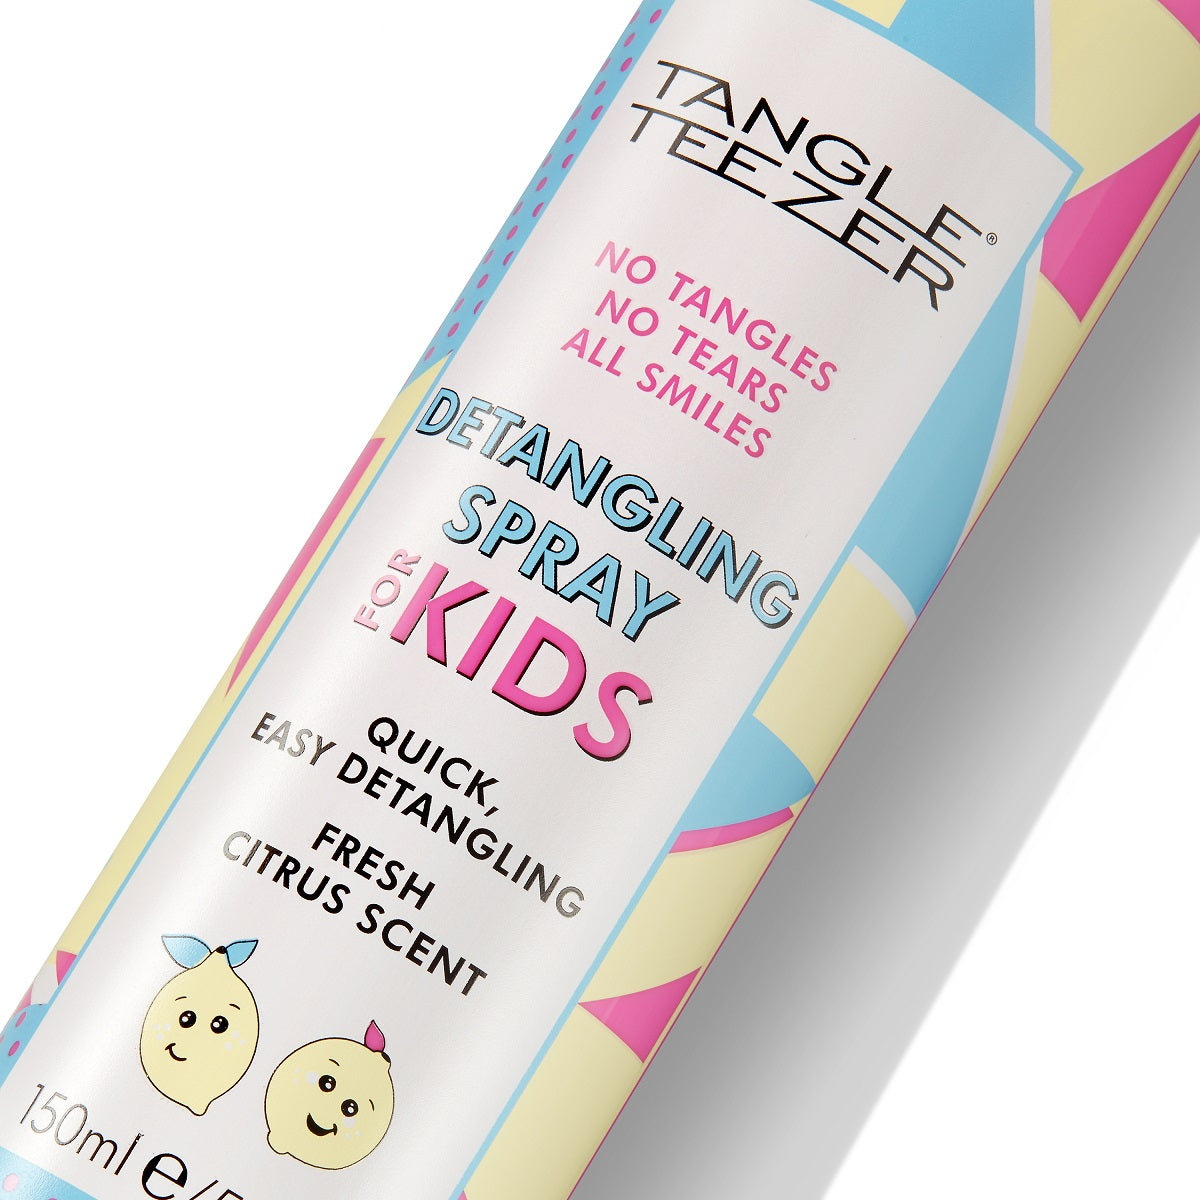 Tangle Teezer Detangling Spray for Kids Leave-In-Pflege 150 ml